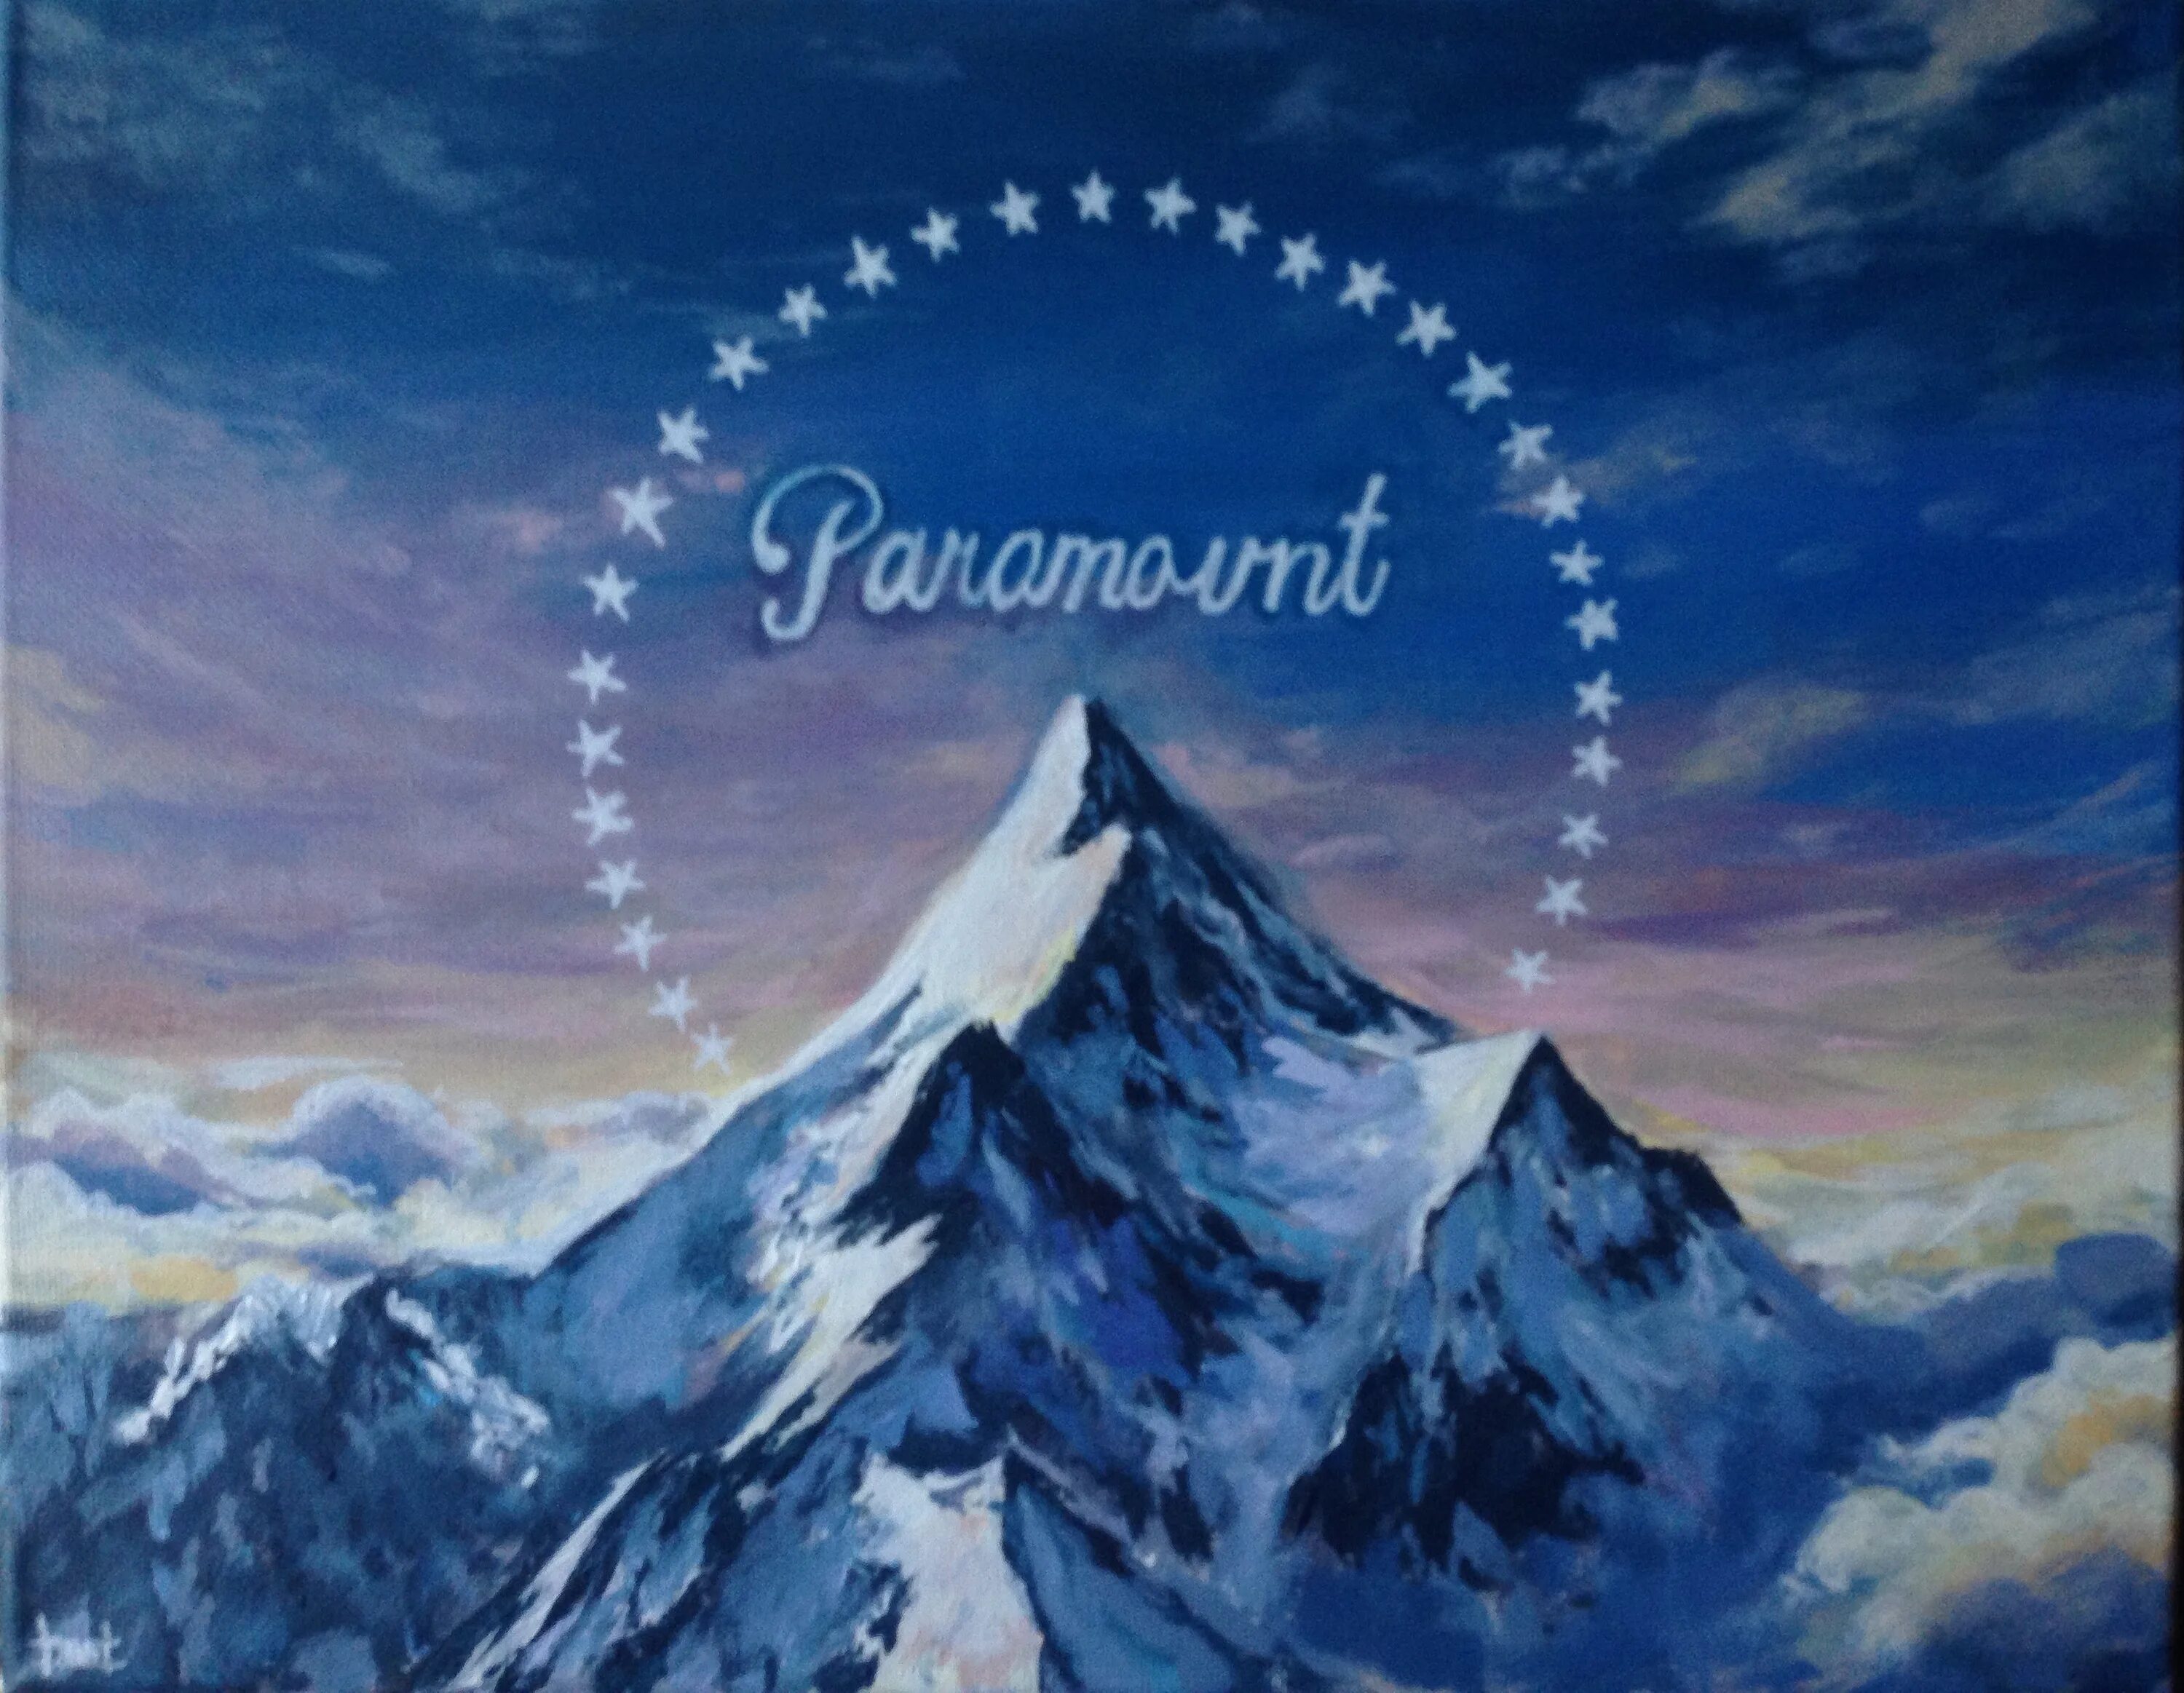 Студия Парамаунт Пикчерз. Парамаунт Пикчерз гора. Гора на логотипе Парамаунт Пикчерз. Кинокомпания Paramount. Парамаунт заставка